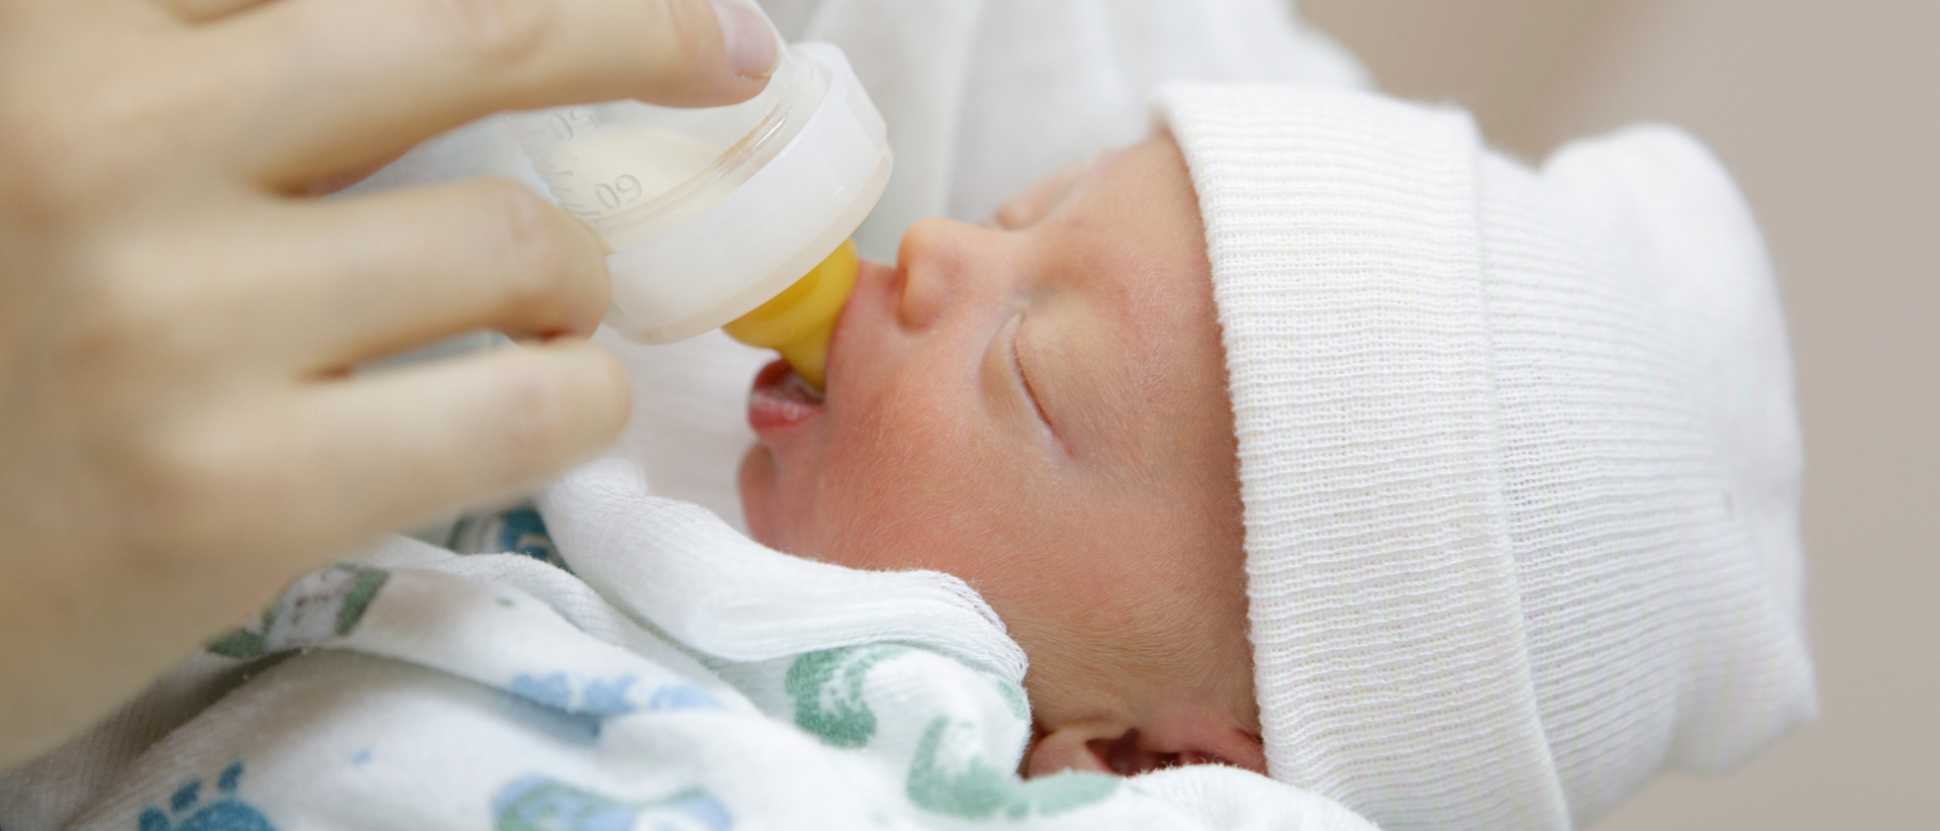 160804-Protein-in-breast-milk-reduces-infection-risk-in-premature-infantsjpg